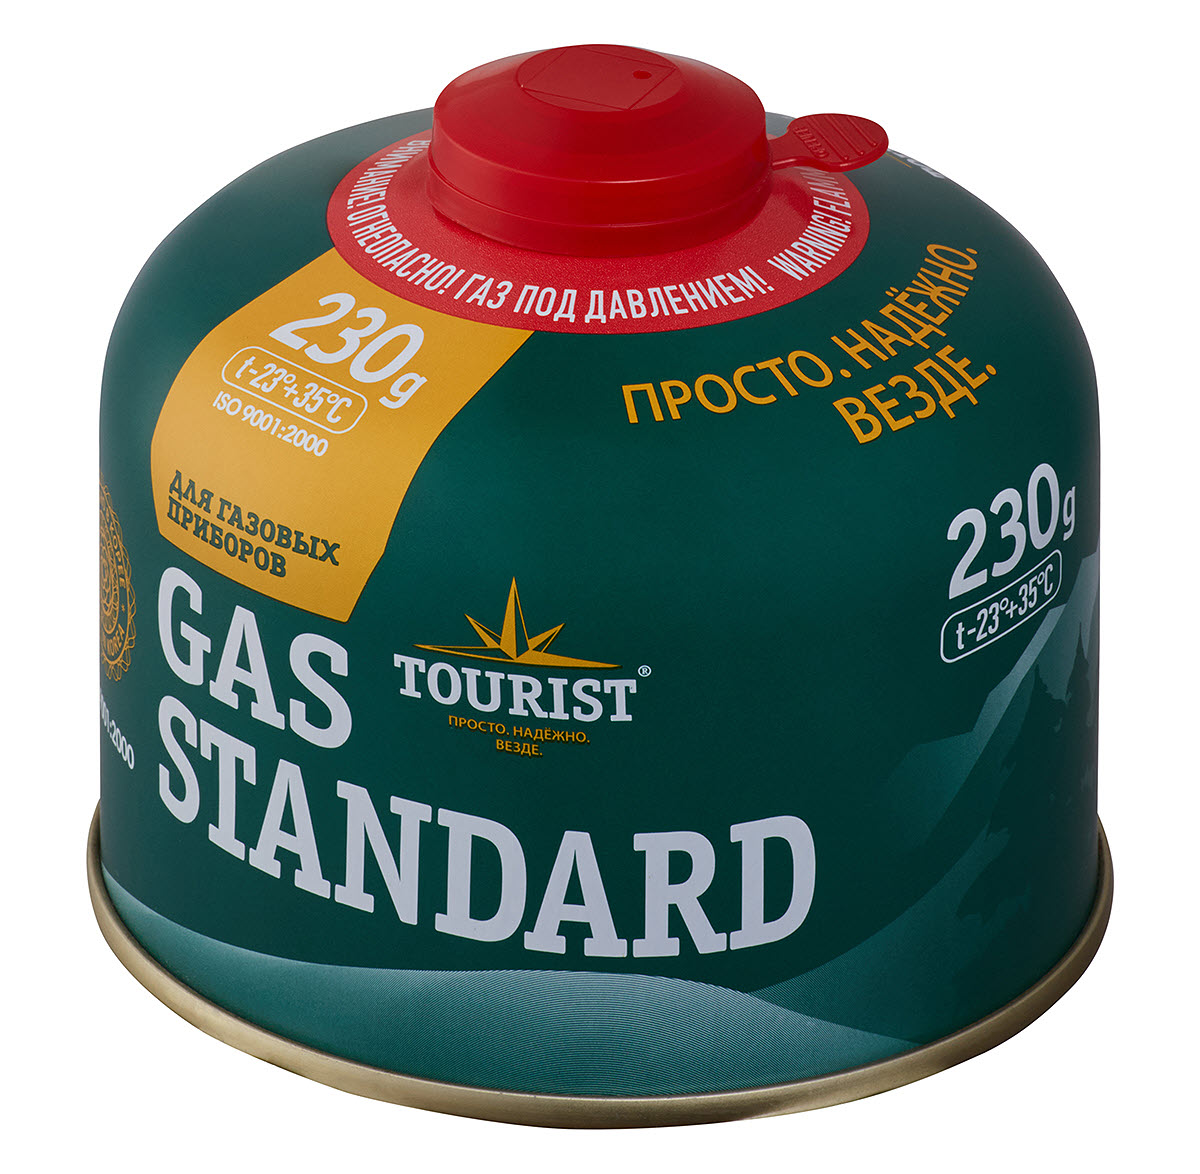 Газ Tourist Standard резьба 230гр